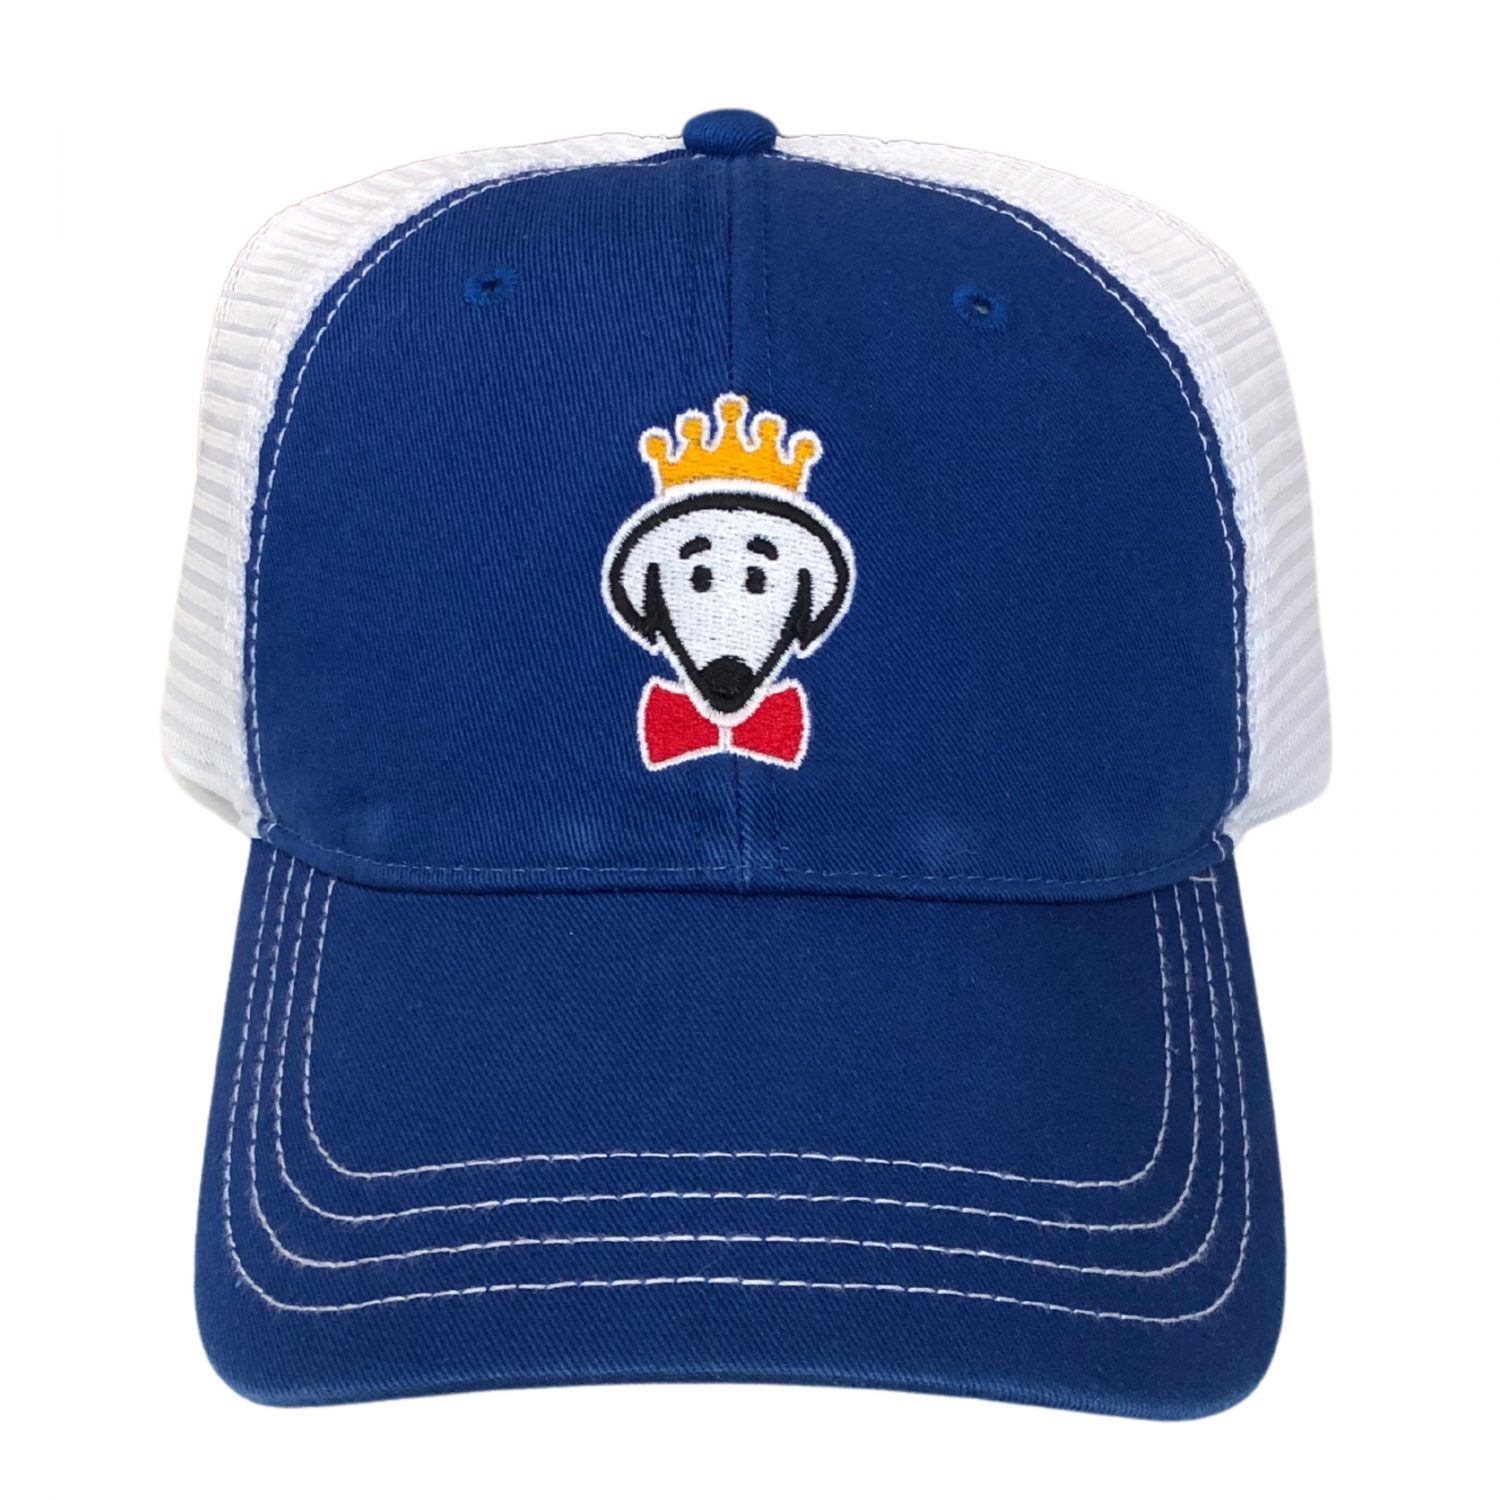 Beau Tyler crown baseball hat royal blue